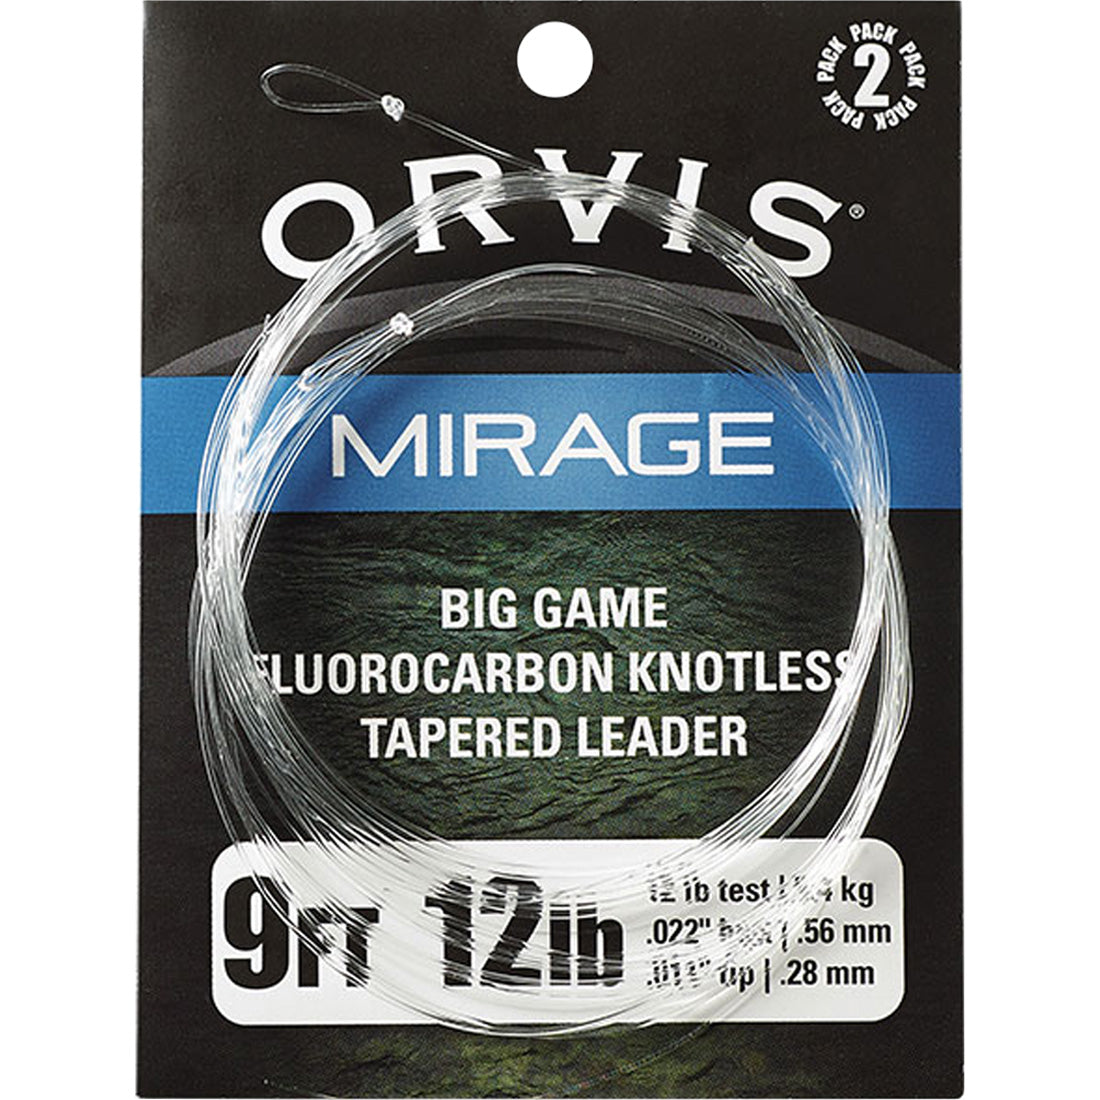 Orvis Mirage Big Game Leader 2 pack